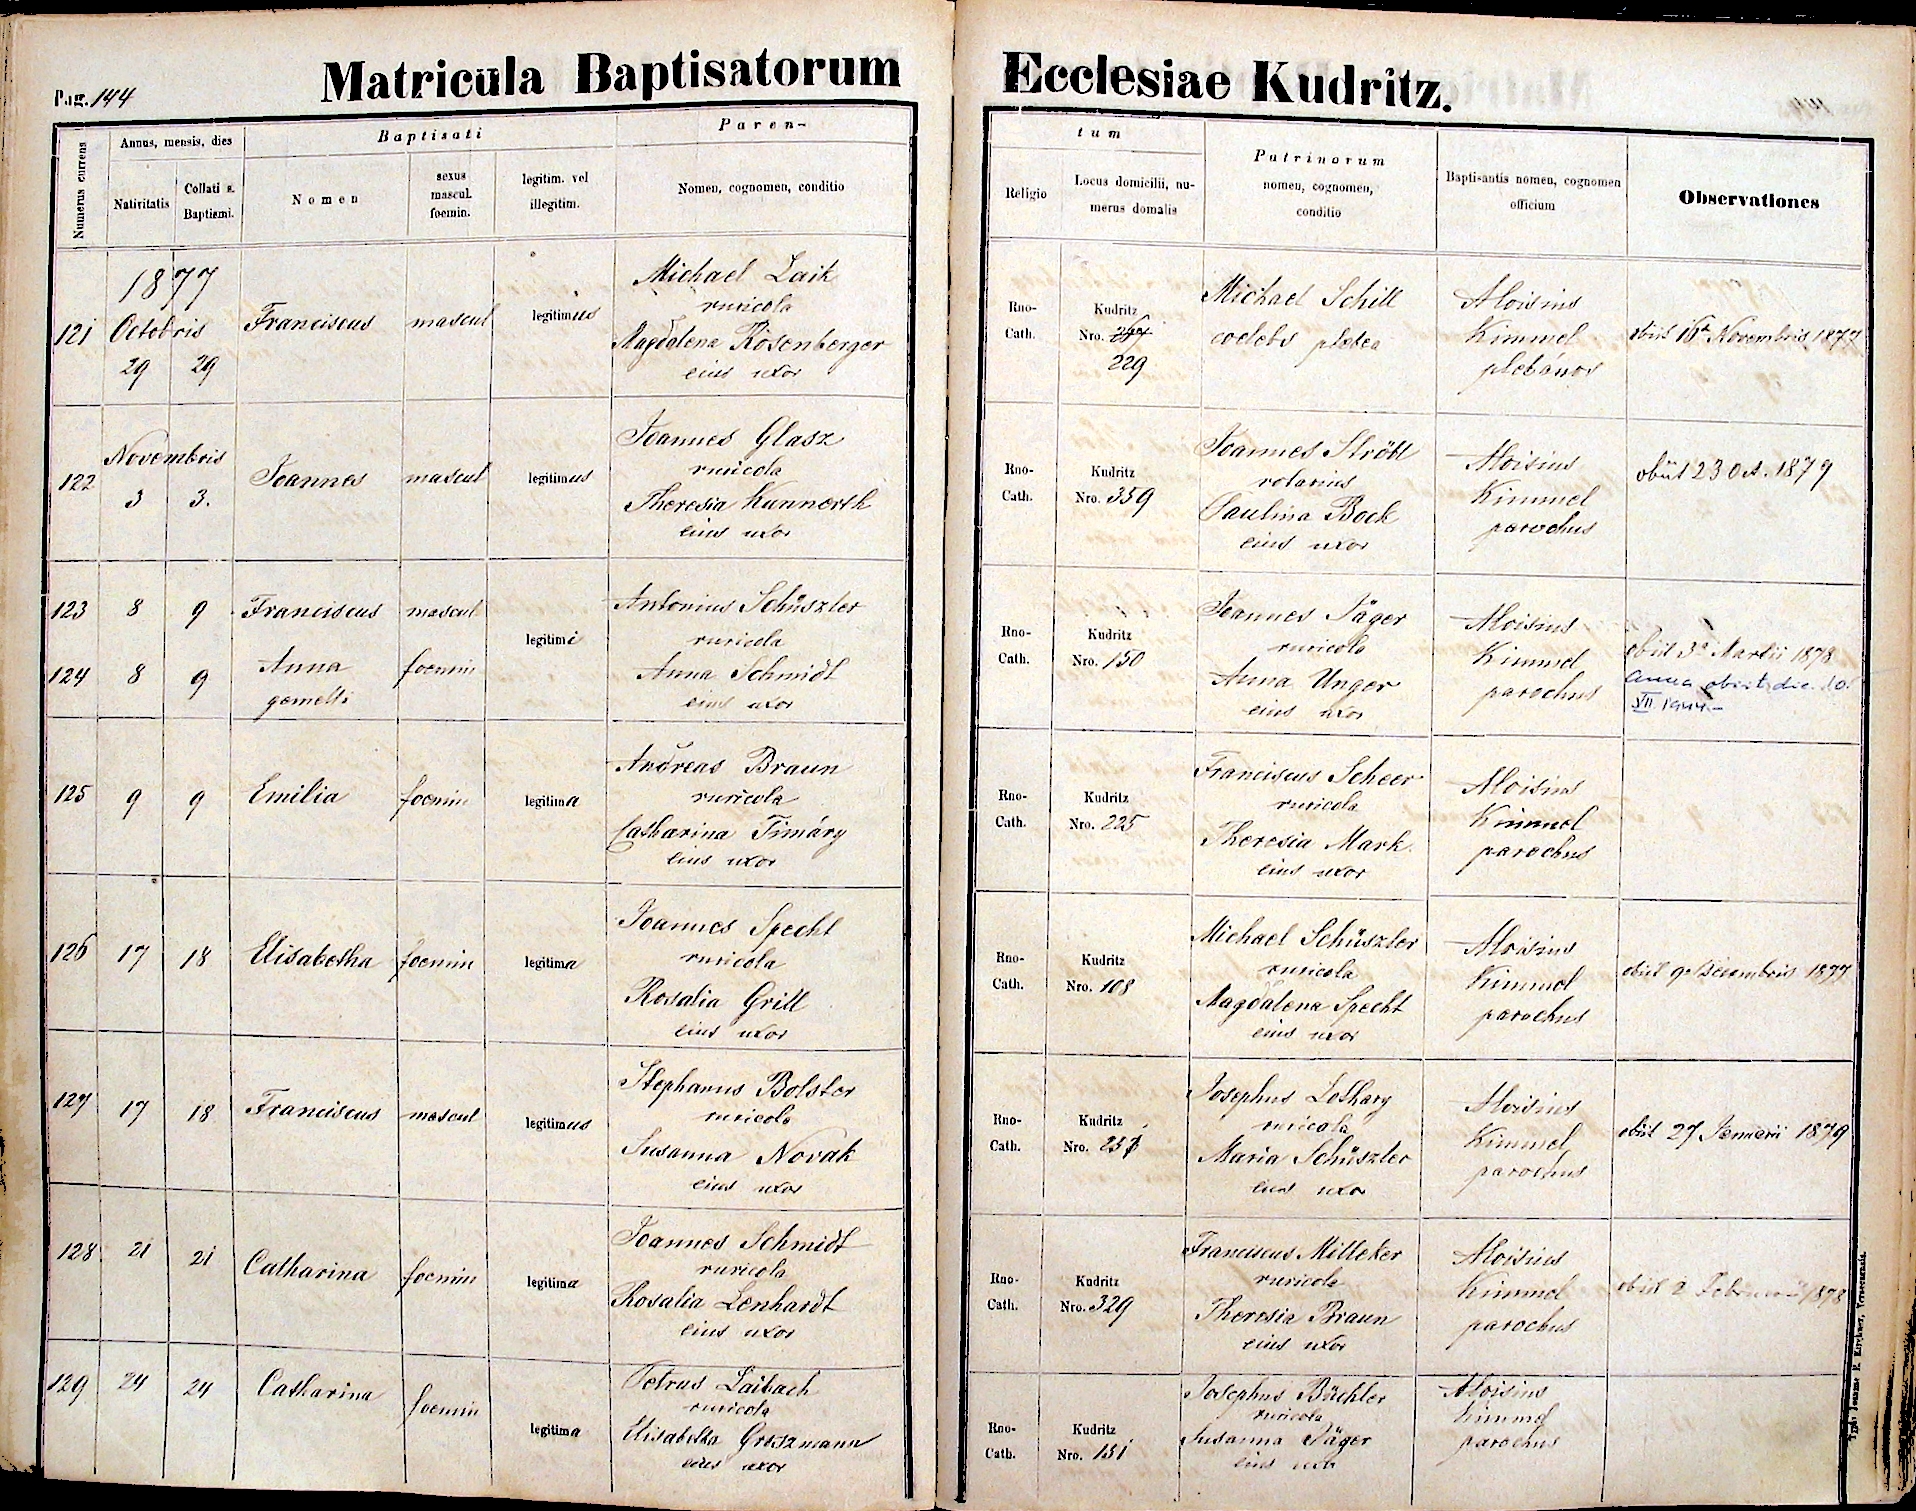 images/church_records/BIRTHS/1870-1879B/1877/144